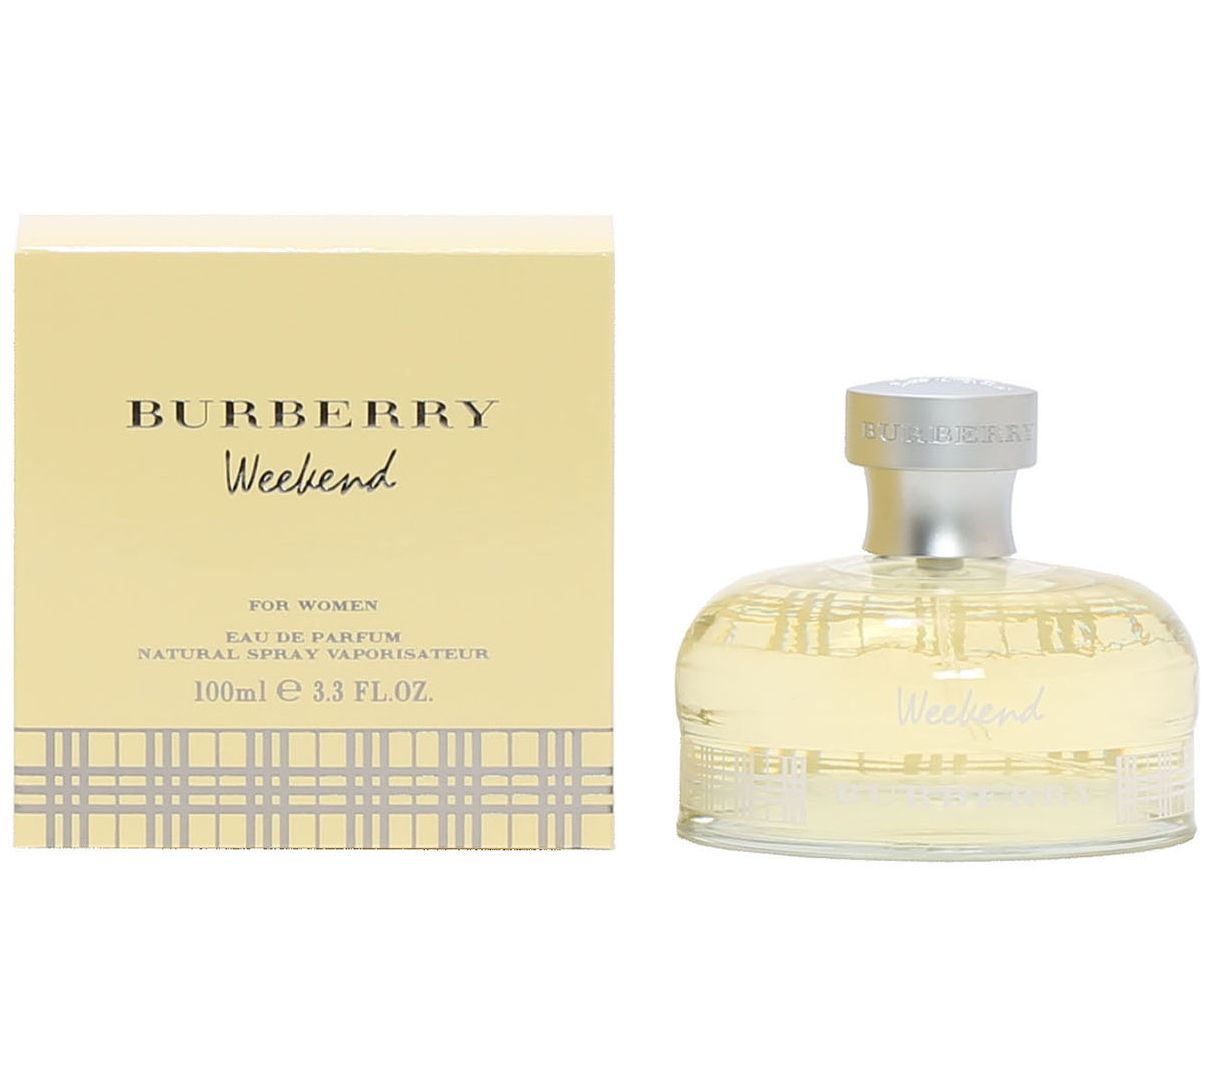 Burberry Weekend Eau Parfum for Women,3.3 fl oz QVC.com